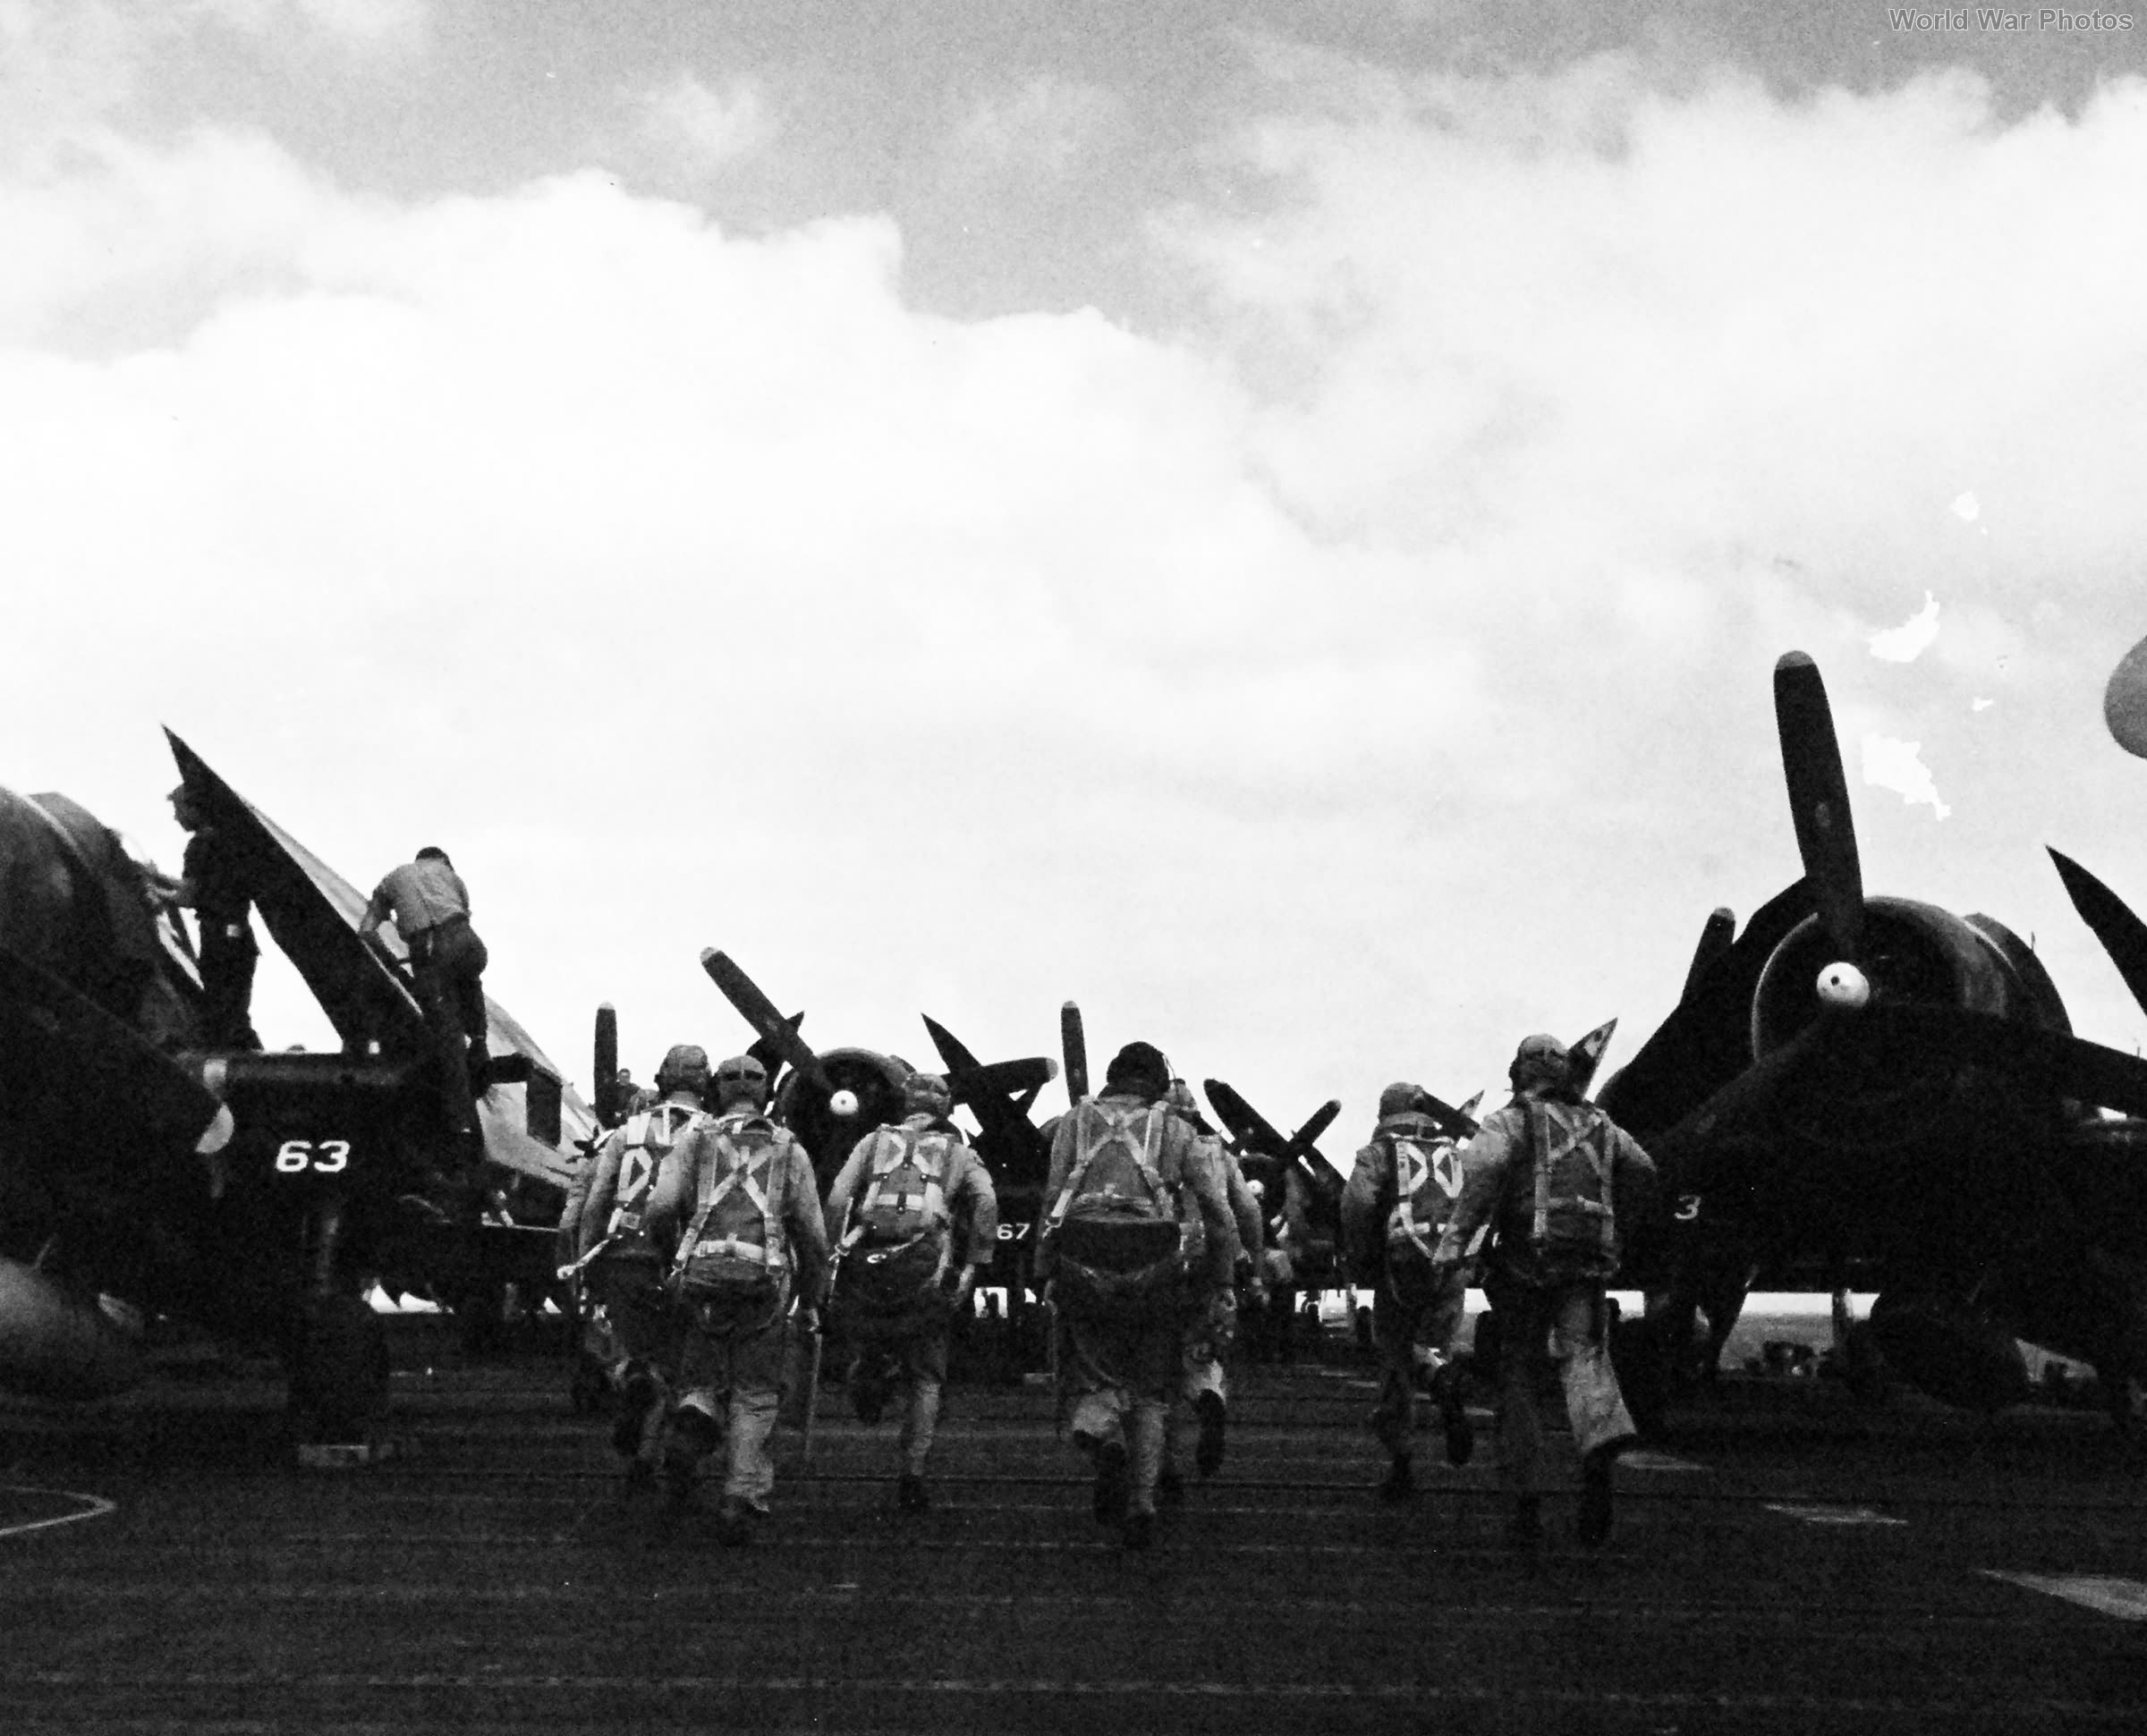 Naval Aviators Rushing To Their F6fs For A Raid On Tokyo Uss Hornet February 1945 World War Photos